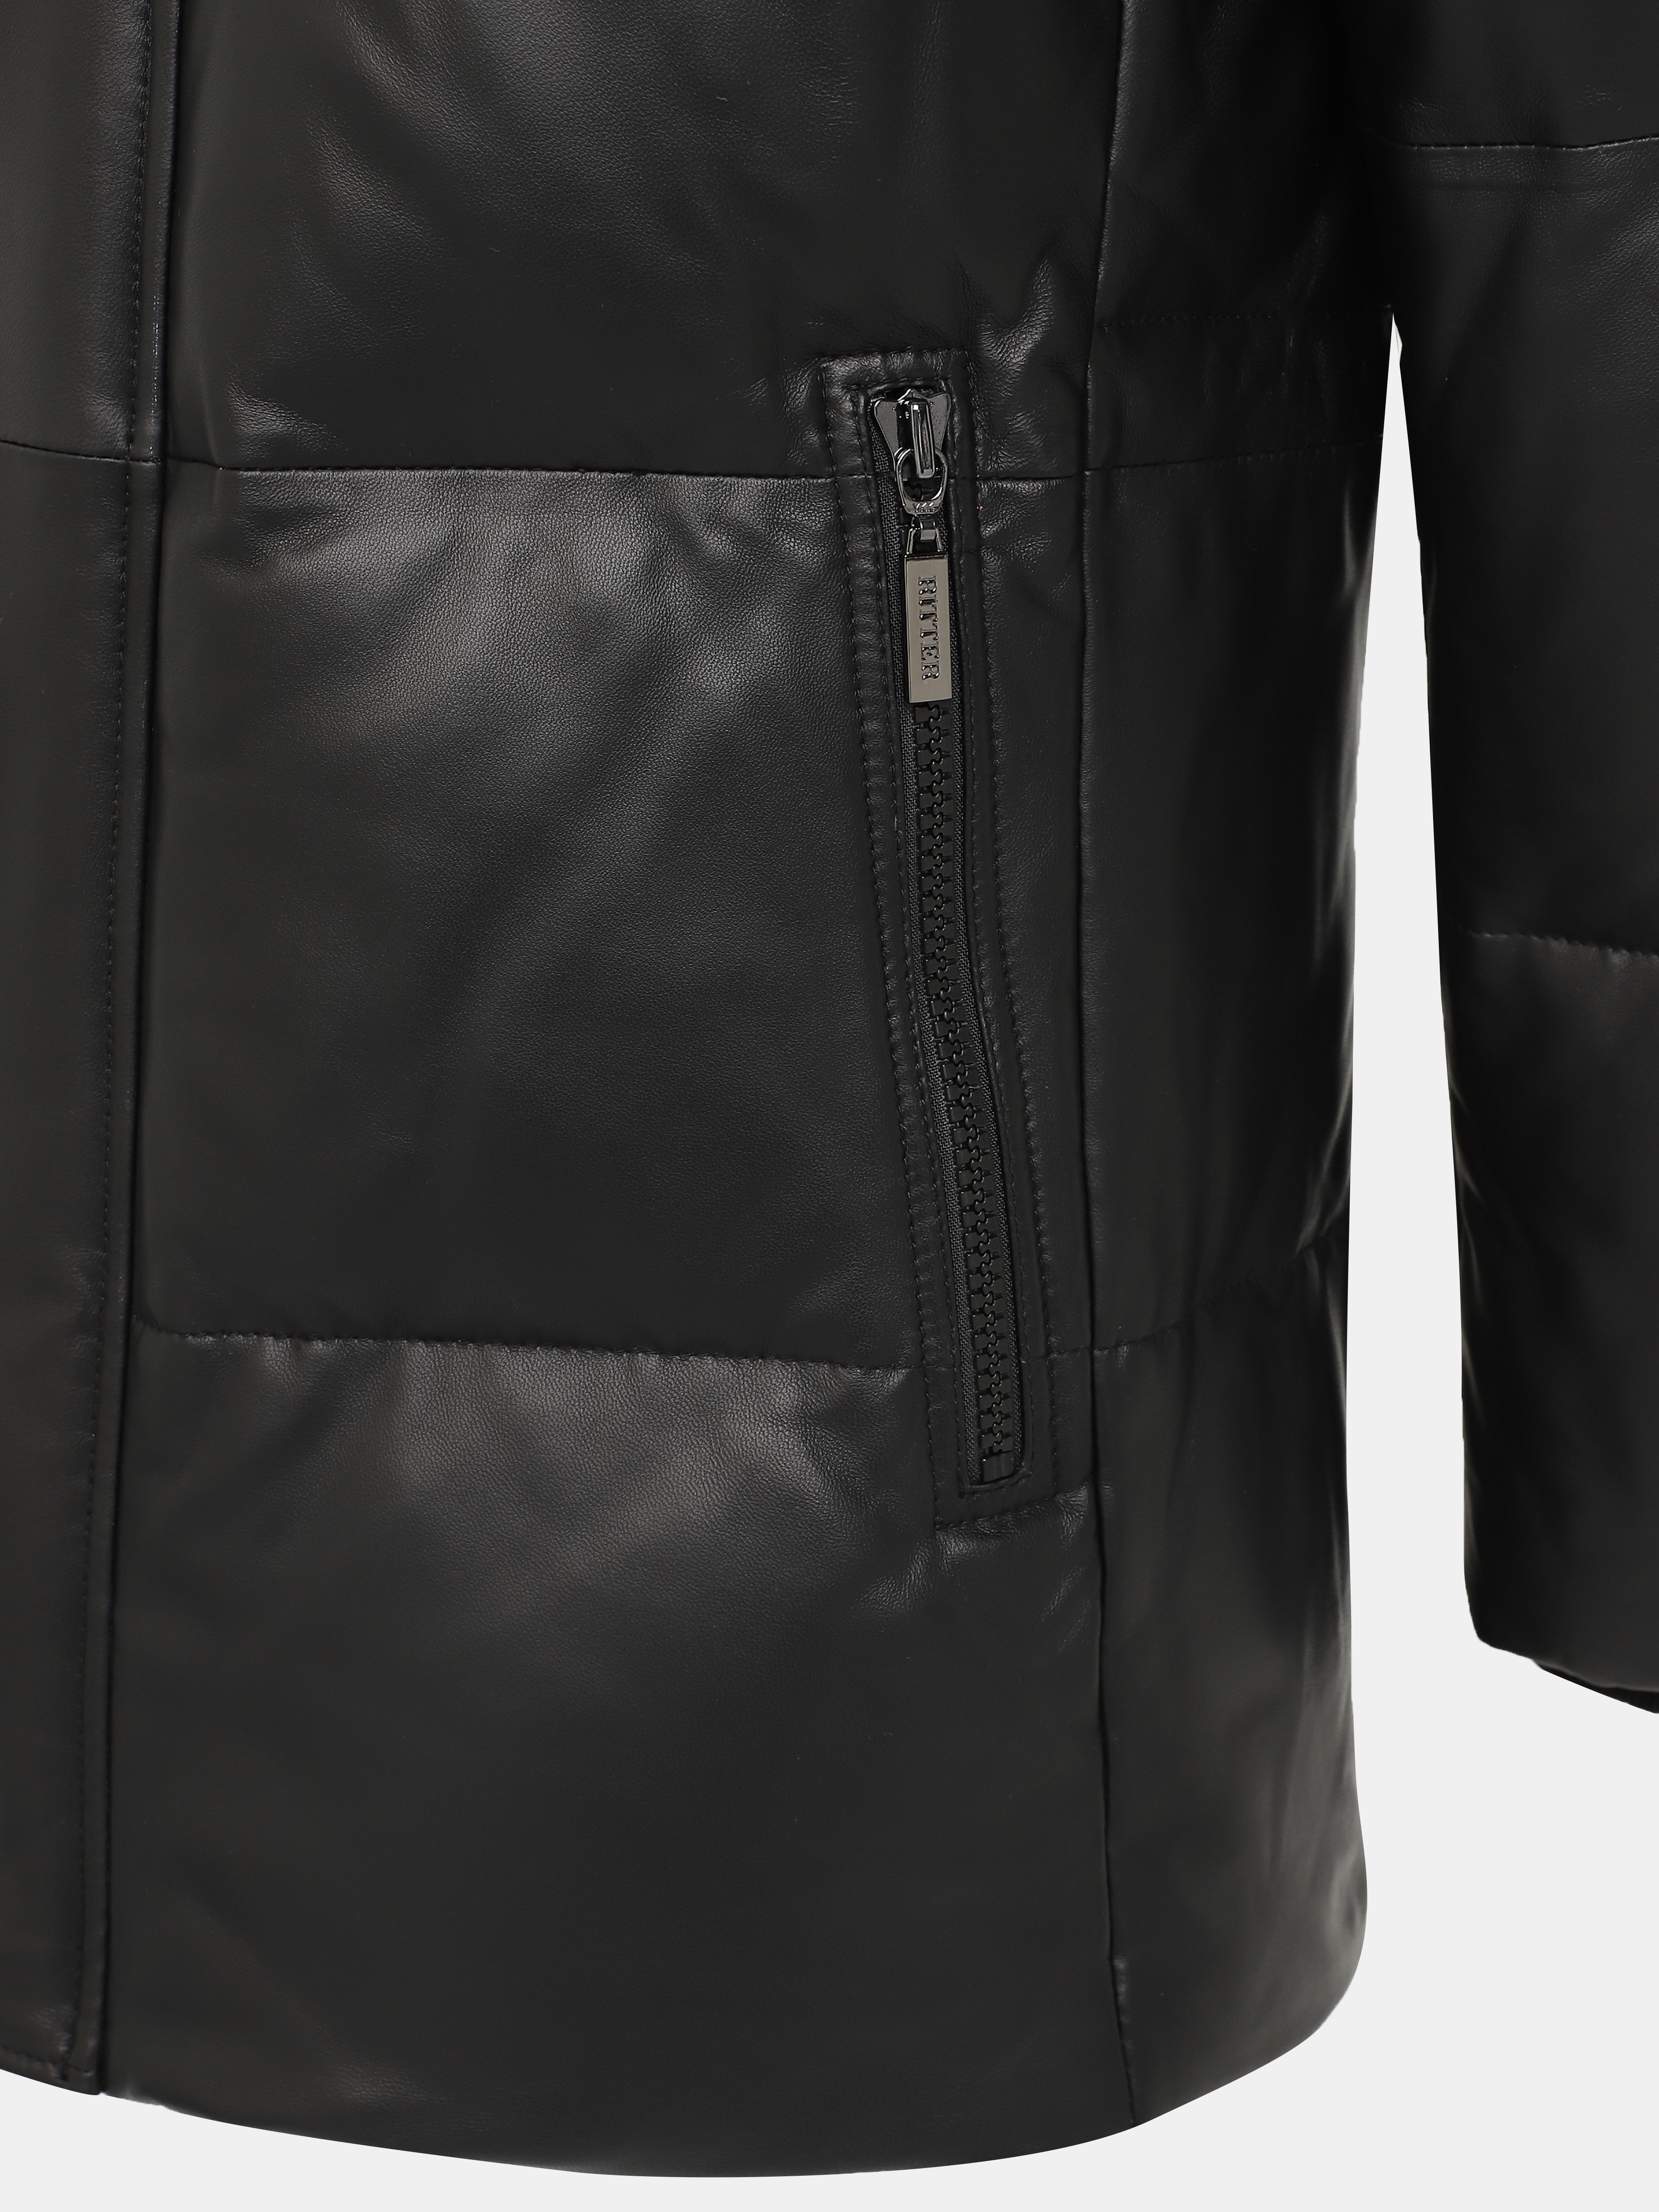 Кожаная куртка Ritter 390990-031, цвет черный, размер 60 - фото 2